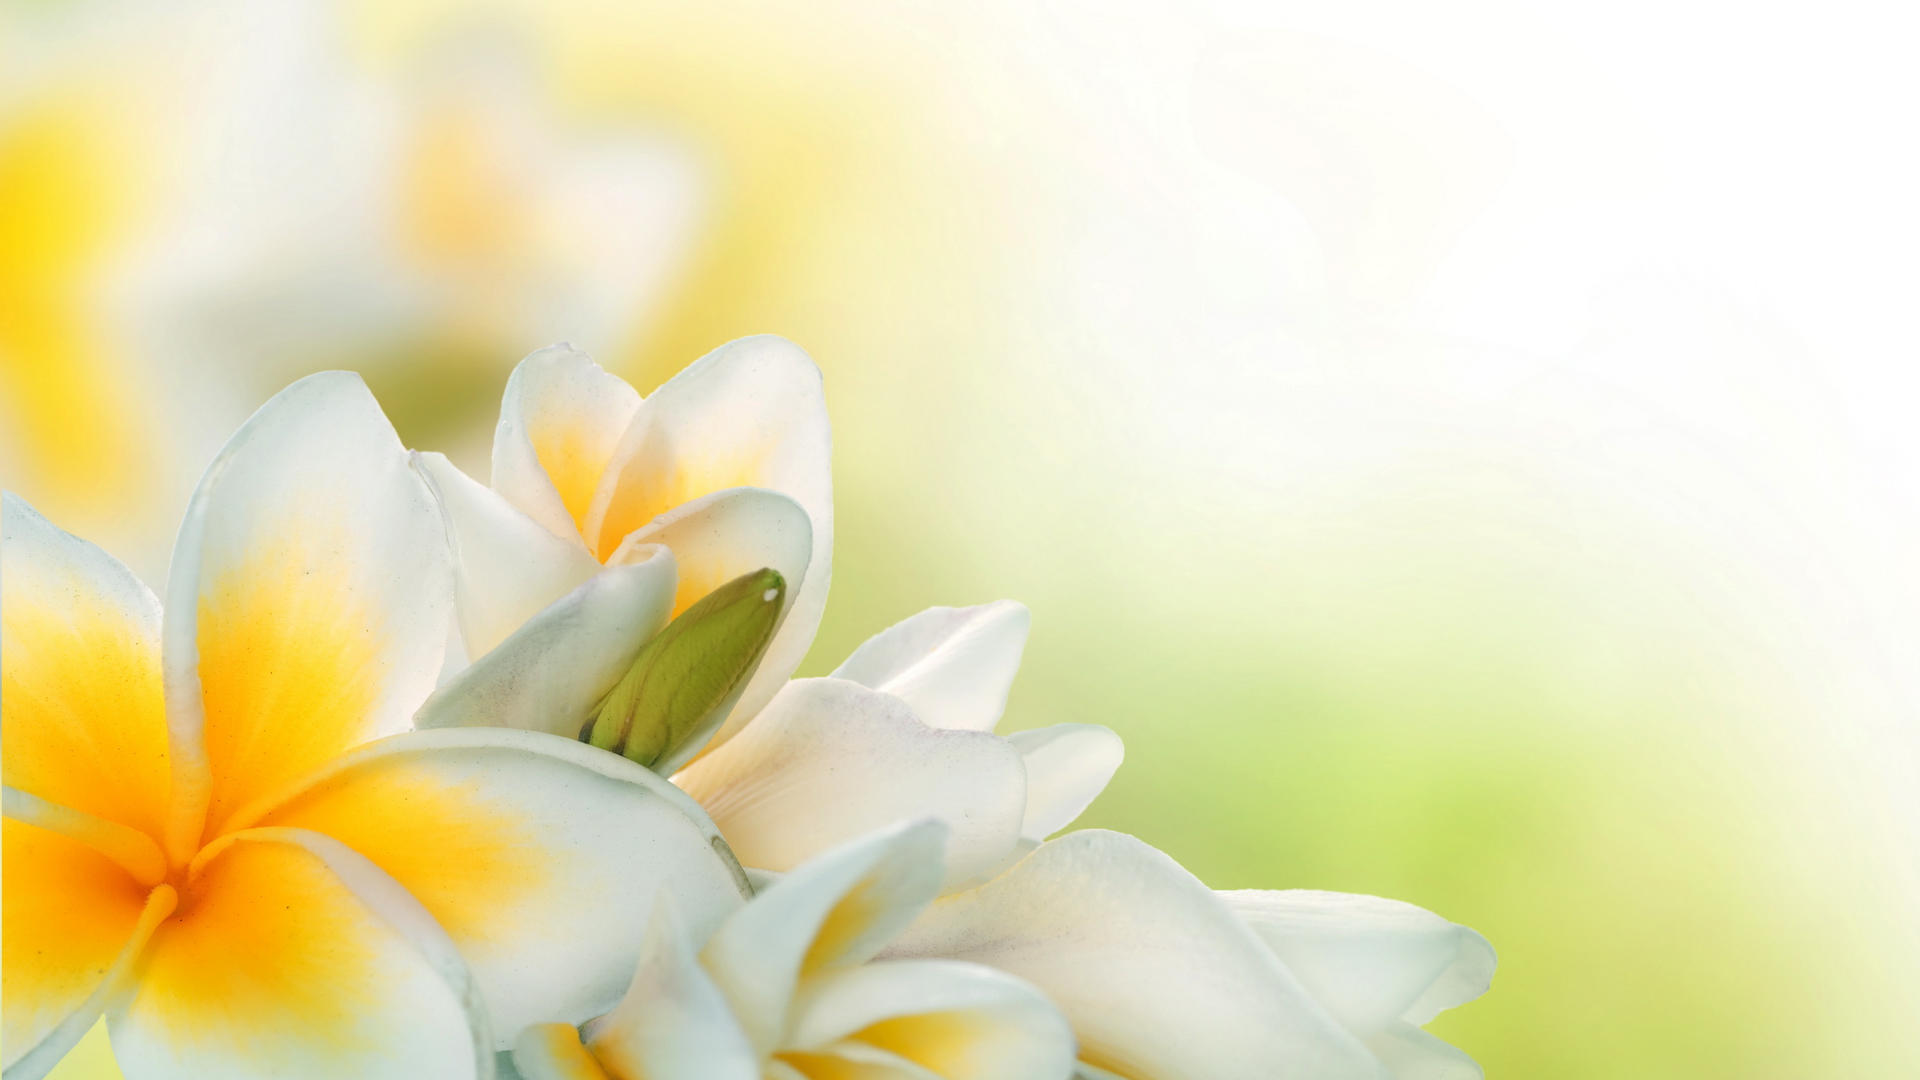 234511 descargar imagen frangipani, tierra/naturaleza, flores: fondos de pantalla y protectores de pantalla gratis